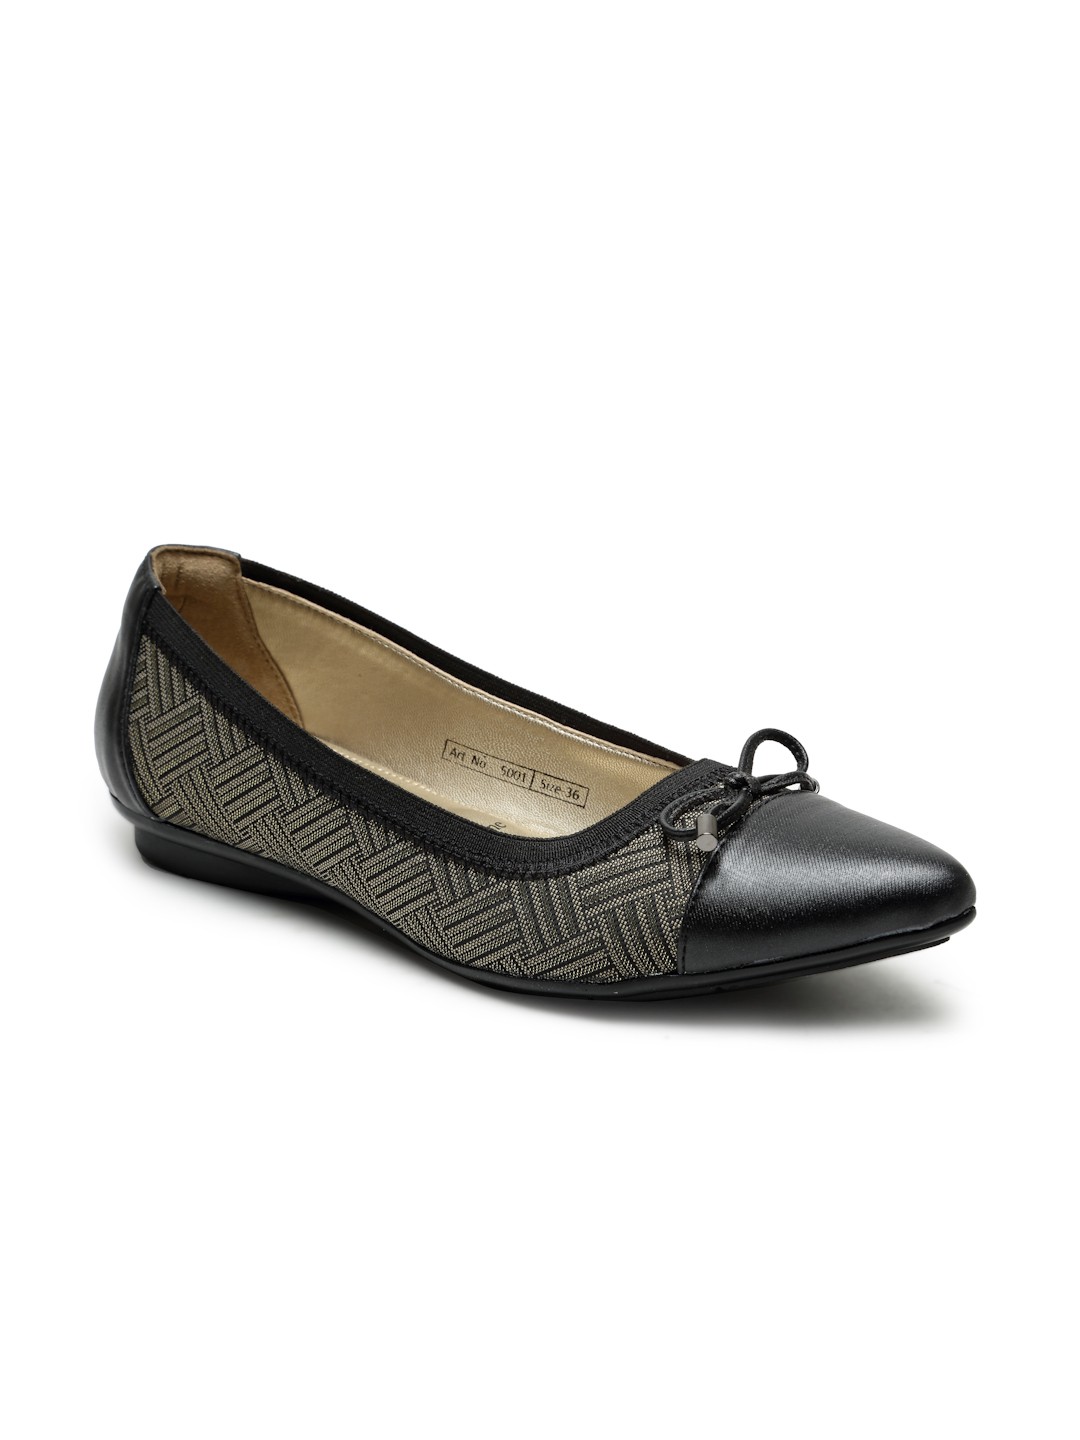 Buy Von Wellx Germany Comfort Women's Black Casual Shoes Lisa Online in Tamil Nadu